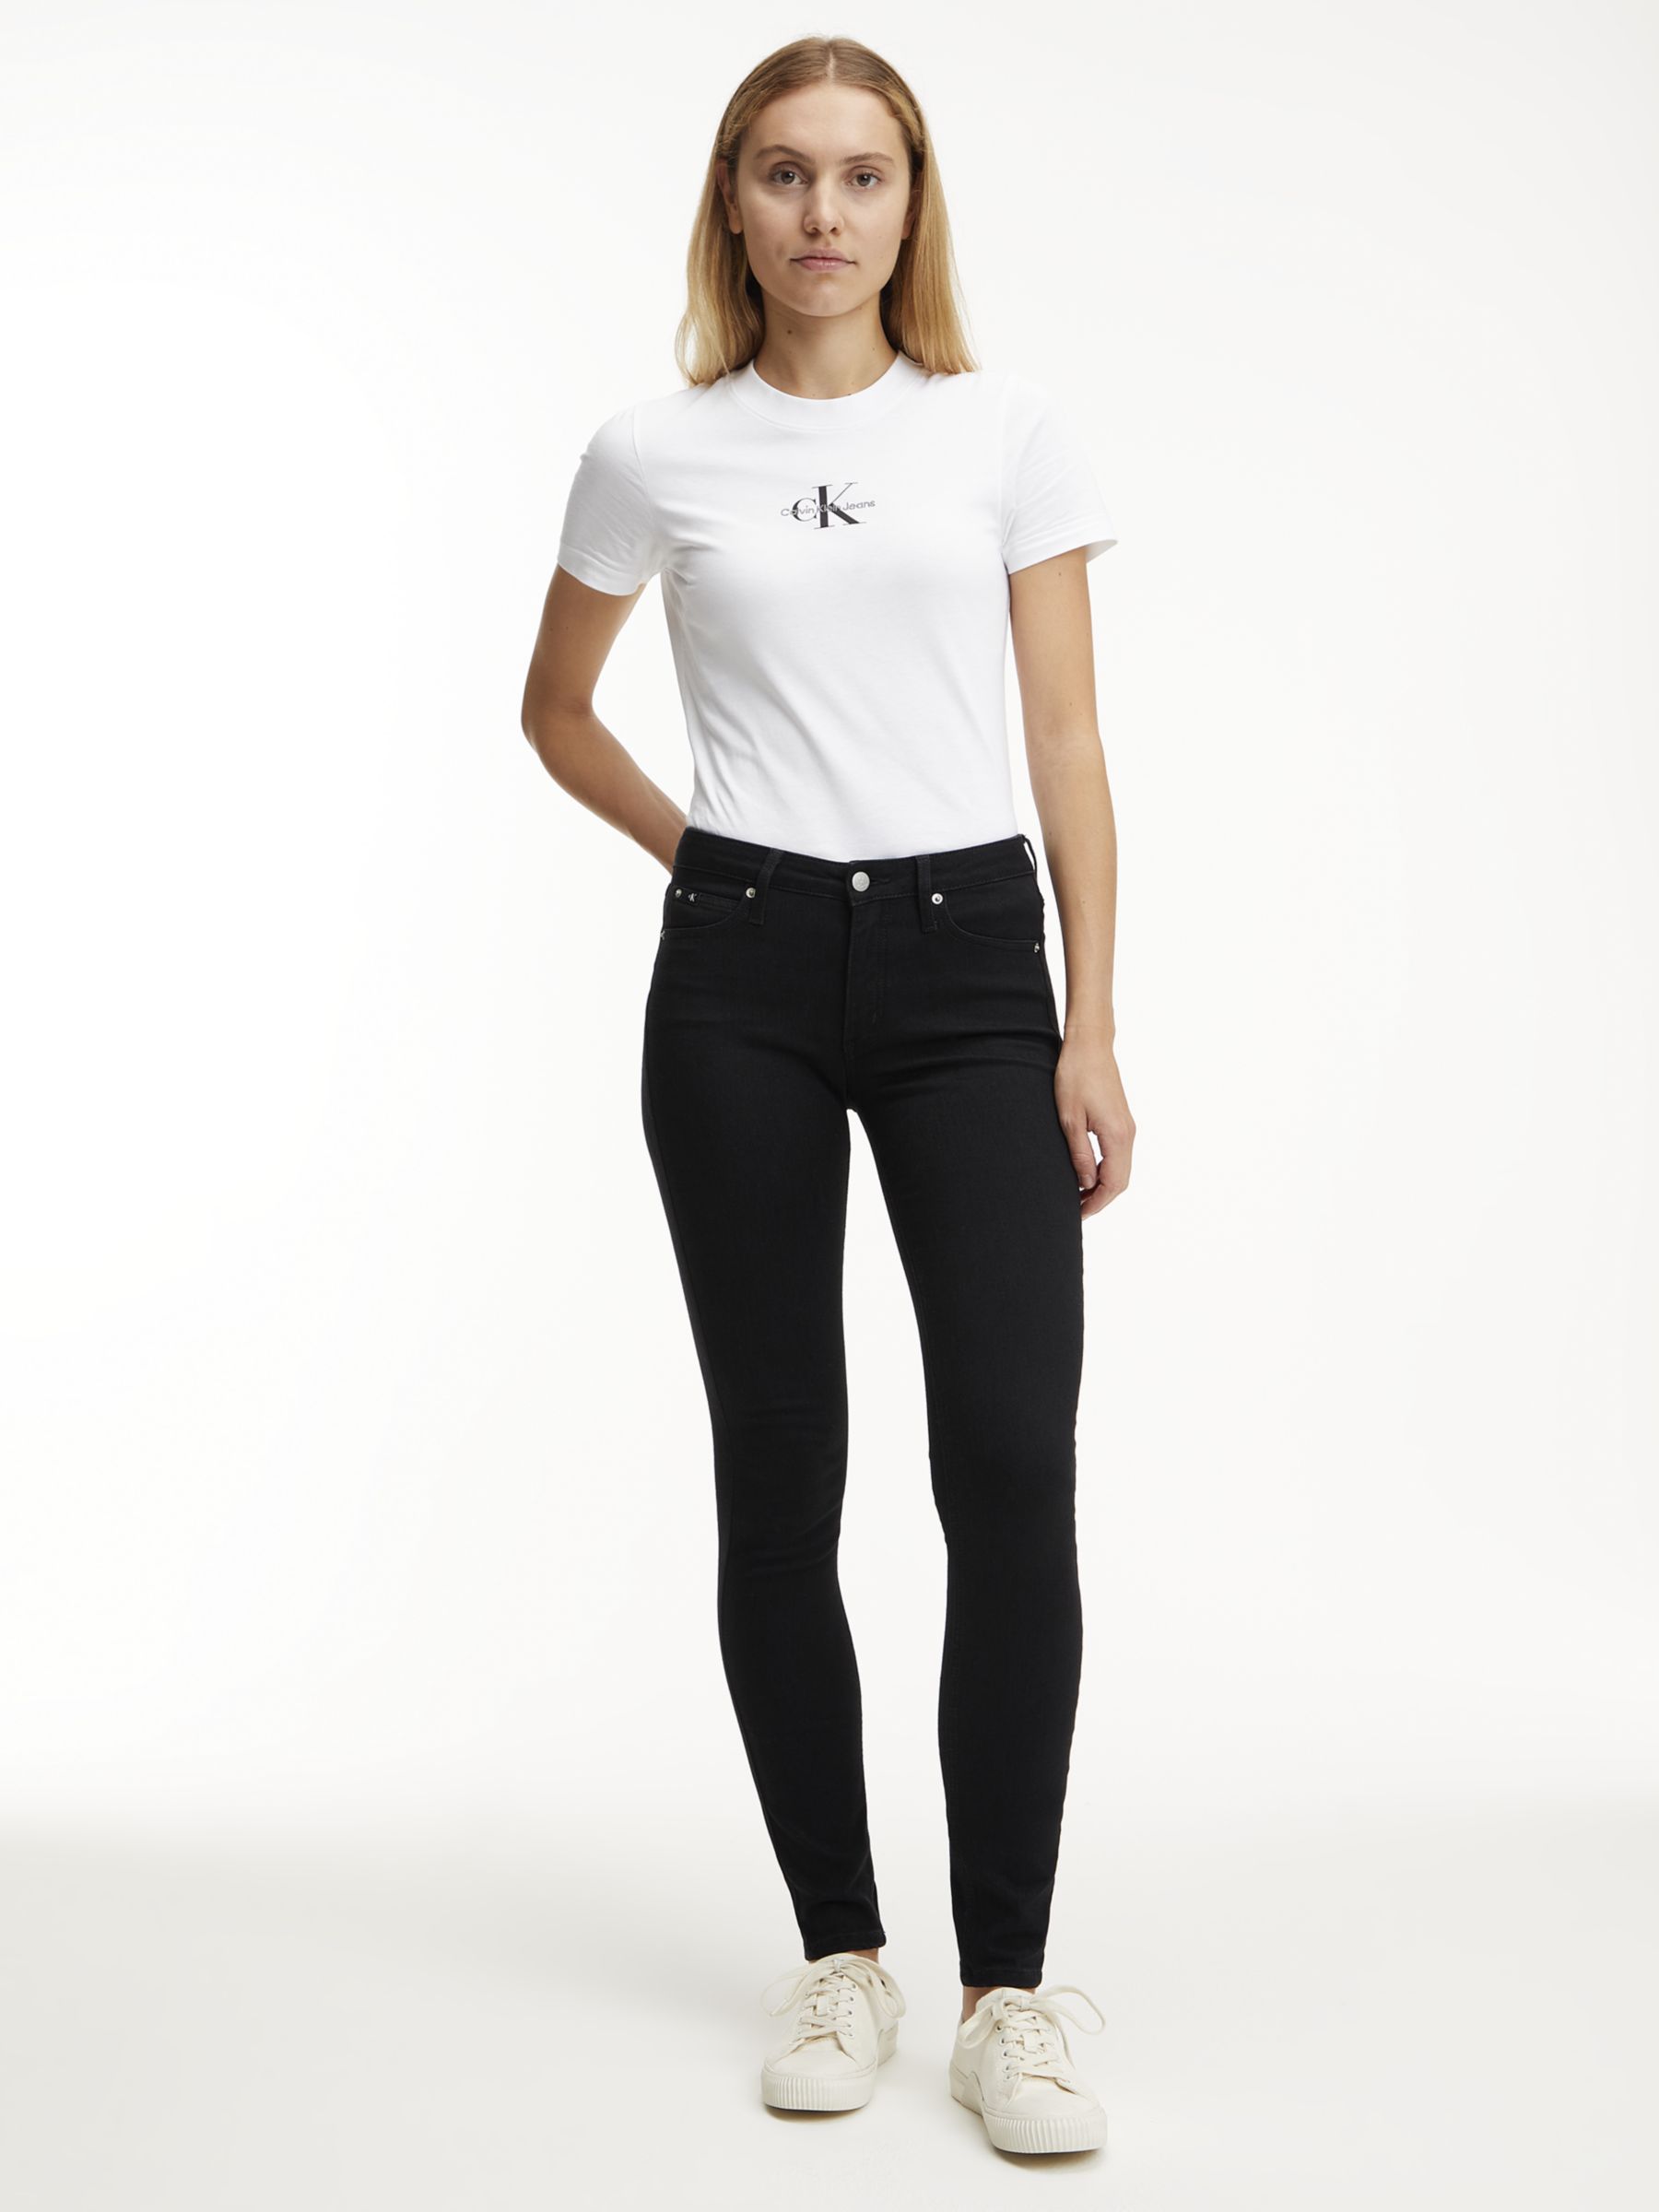 Calvin Klein Mid Rise Skinny Jeans, Black, 28R